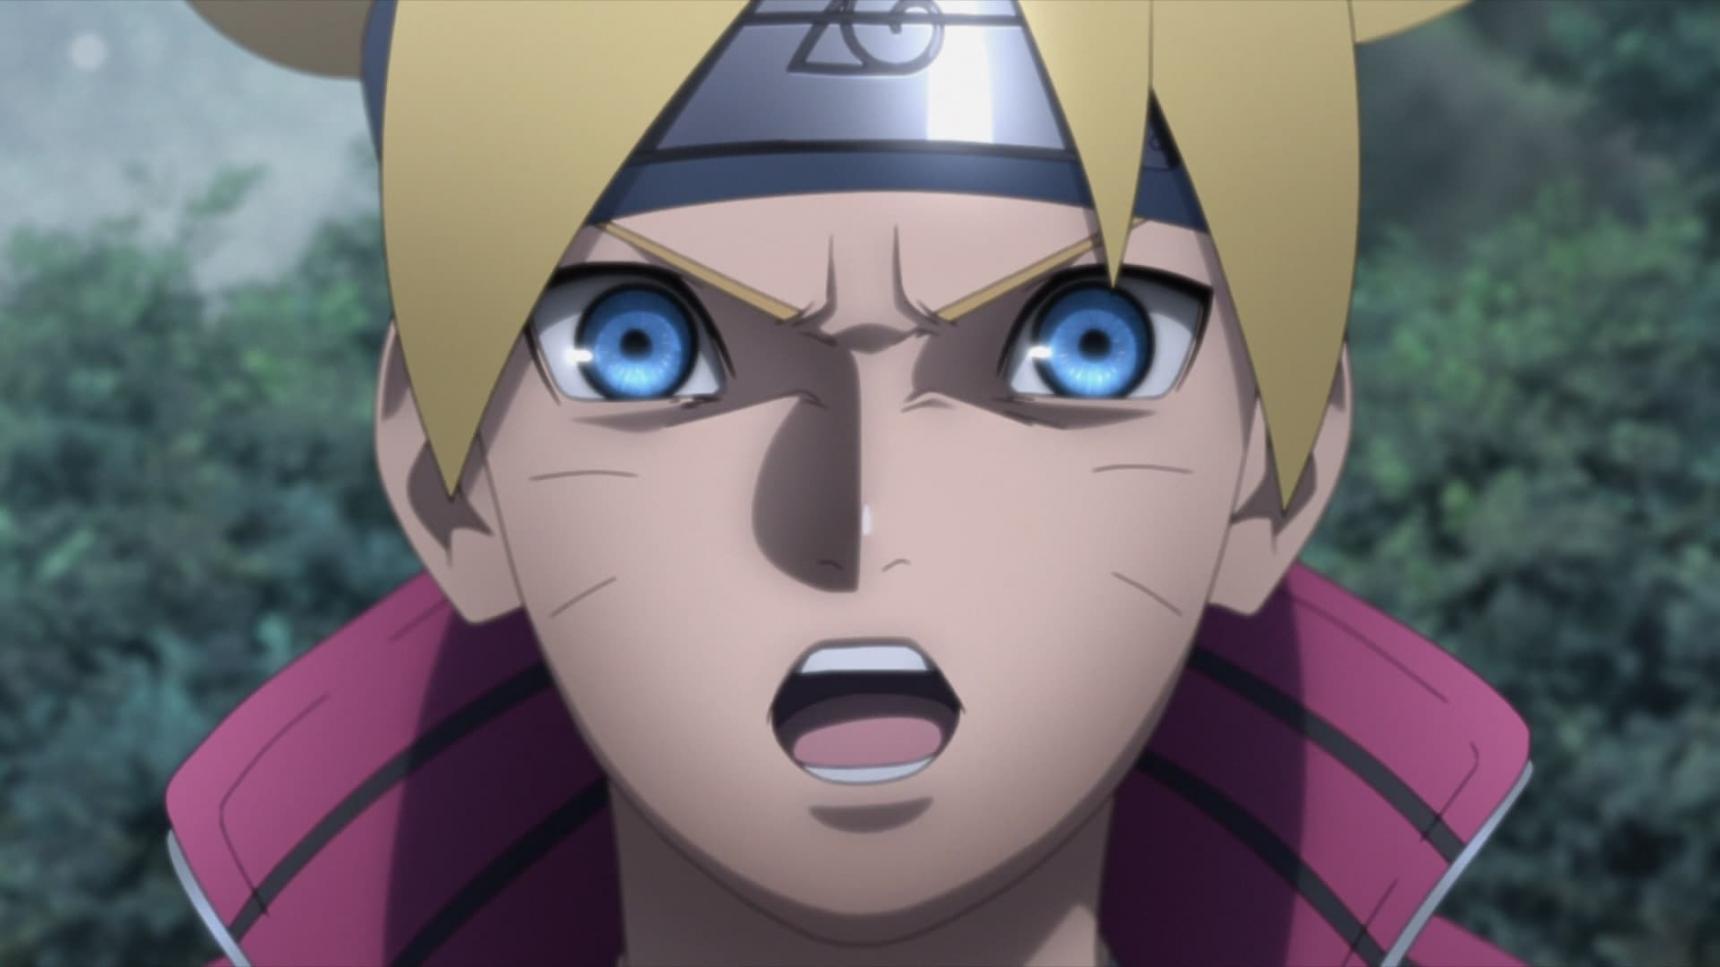 Poster del episodio 290 de Boruto: Naruto Next Generations online